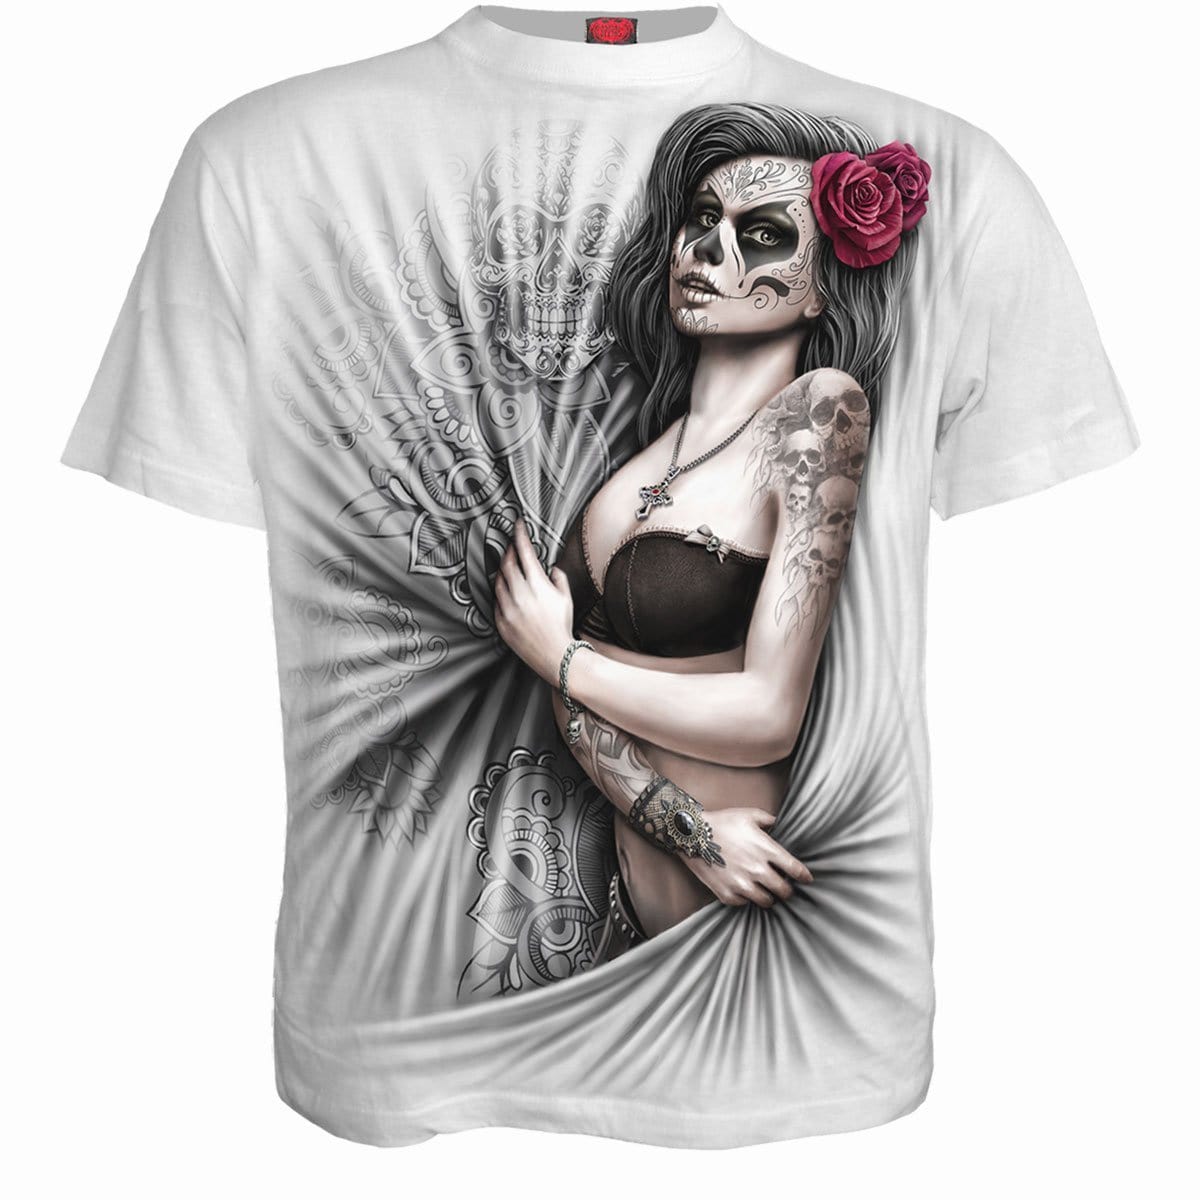 DEAD LOVE - T-Shirt White - Spiral USA